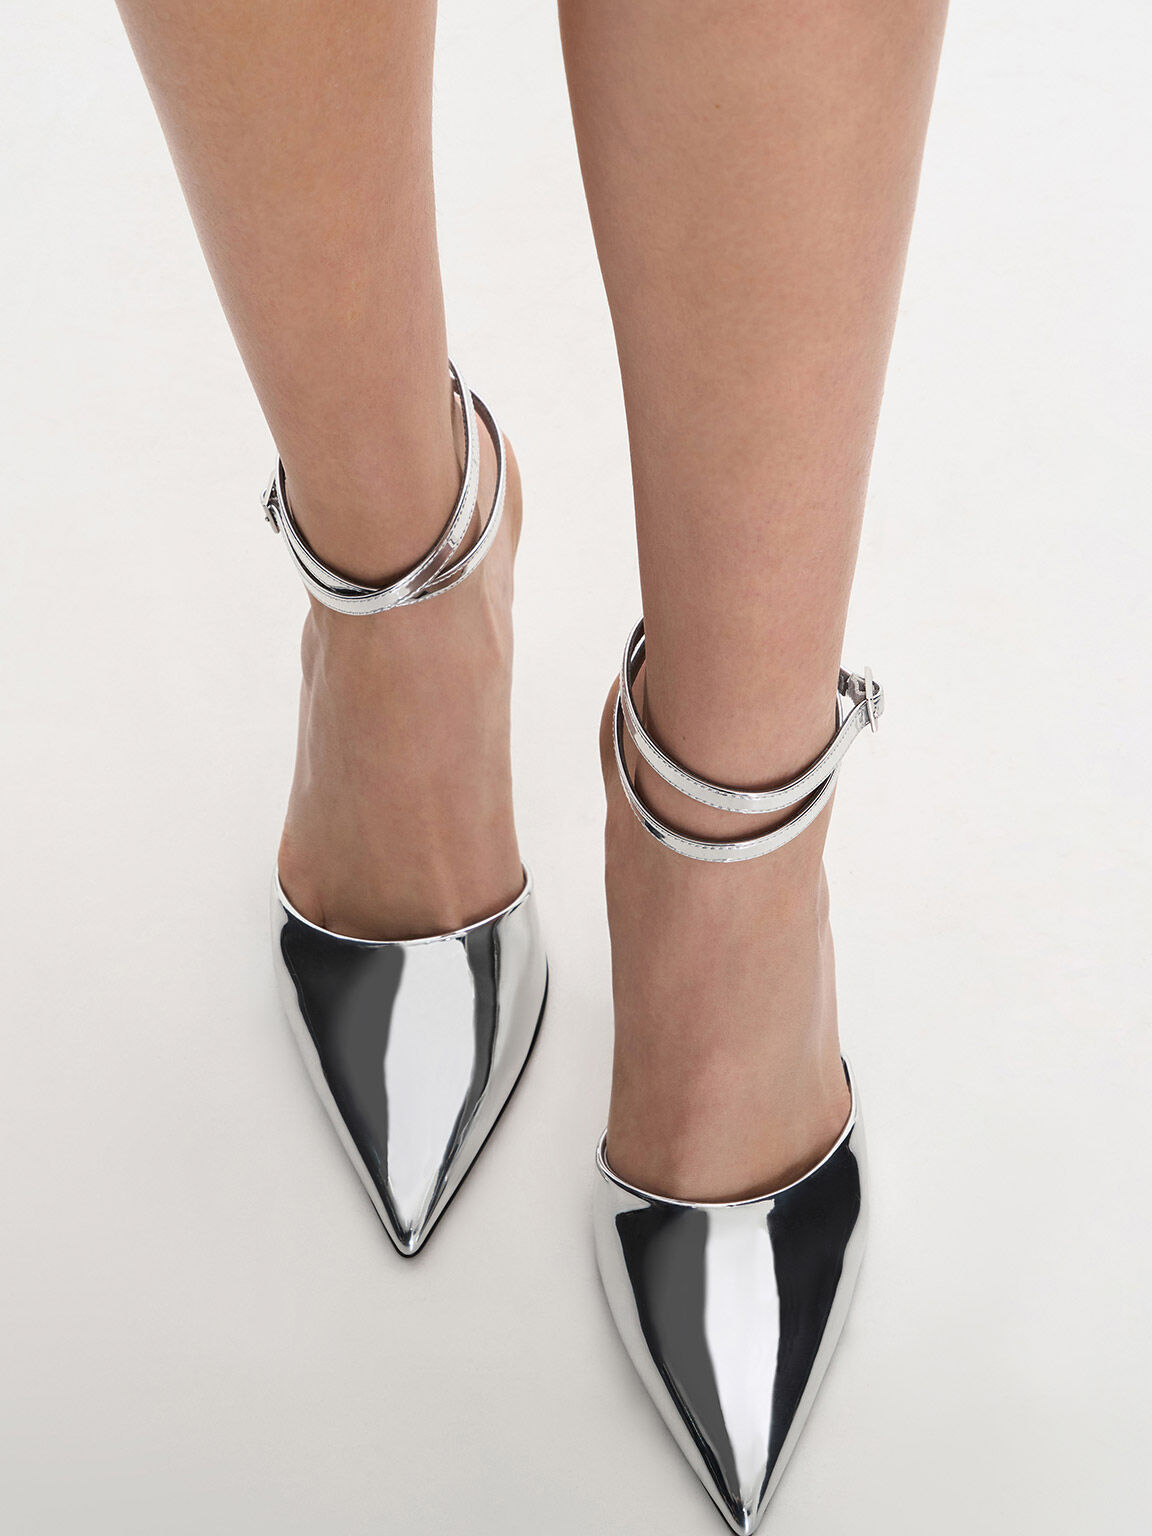 Diamante Heels Shoes For Women's | Siren Shoes